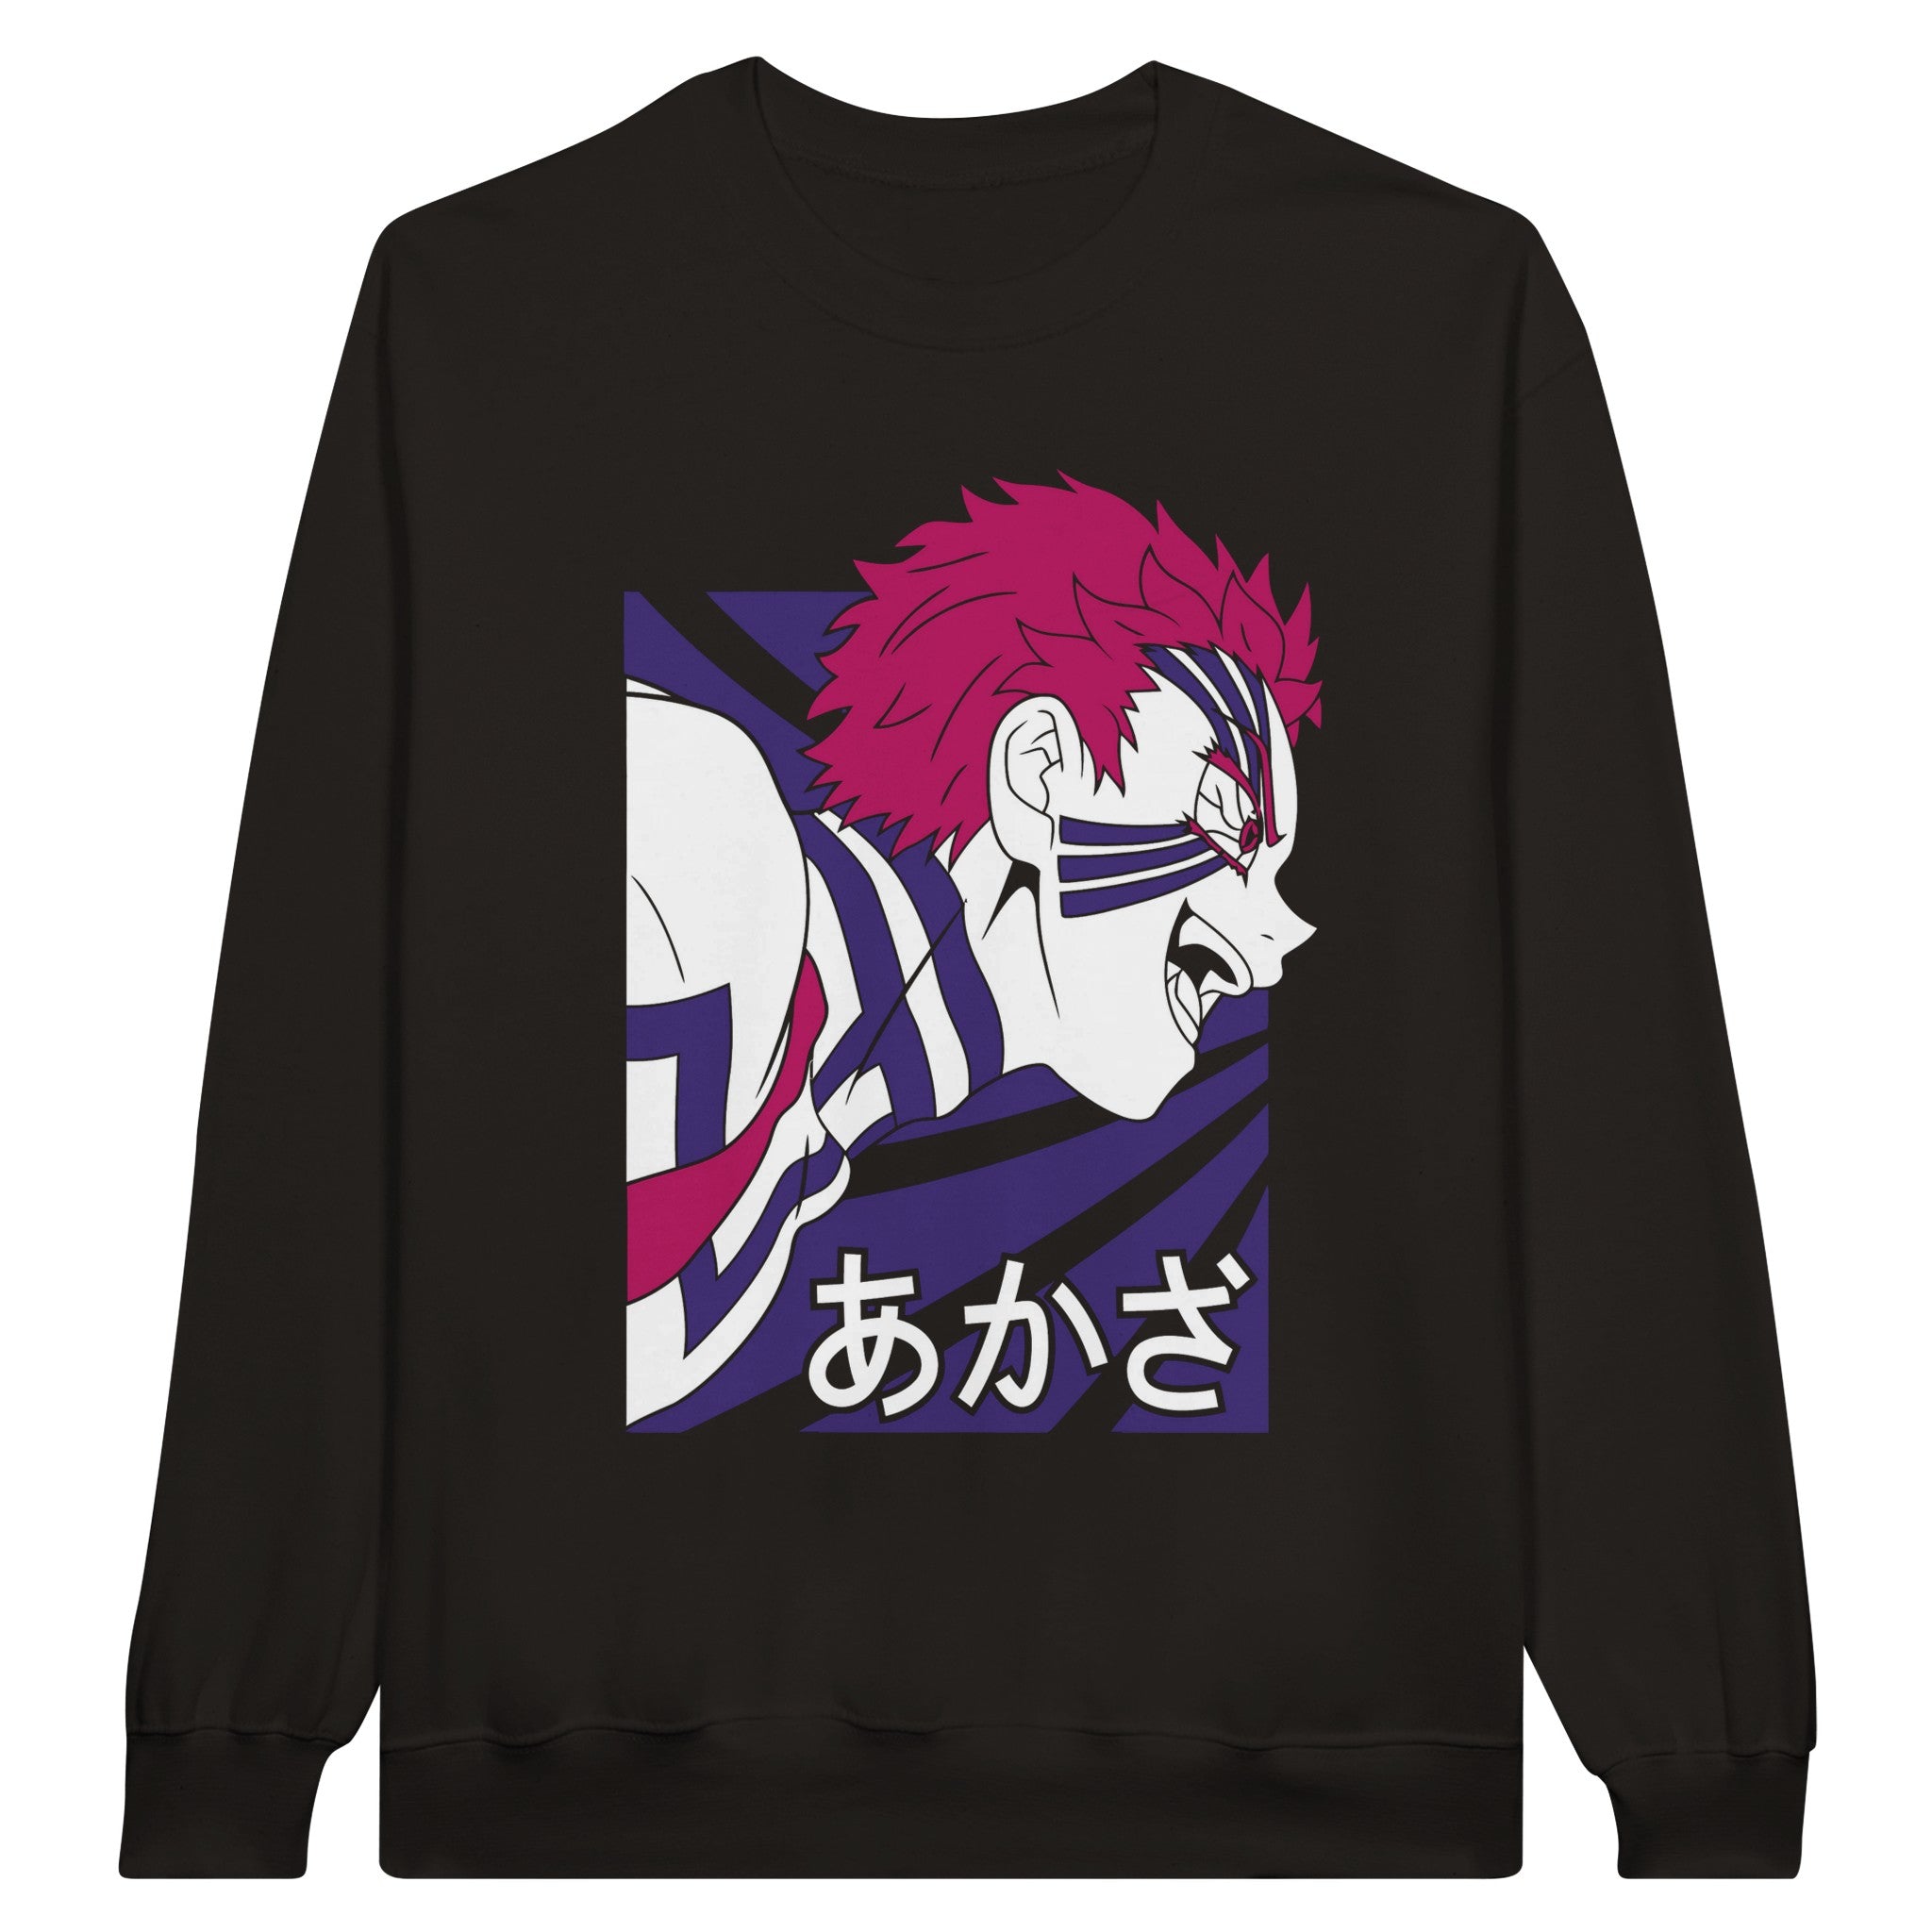 shop and buy demon slayer anime clothing akaza sweatshirt/longsleeve/jumper